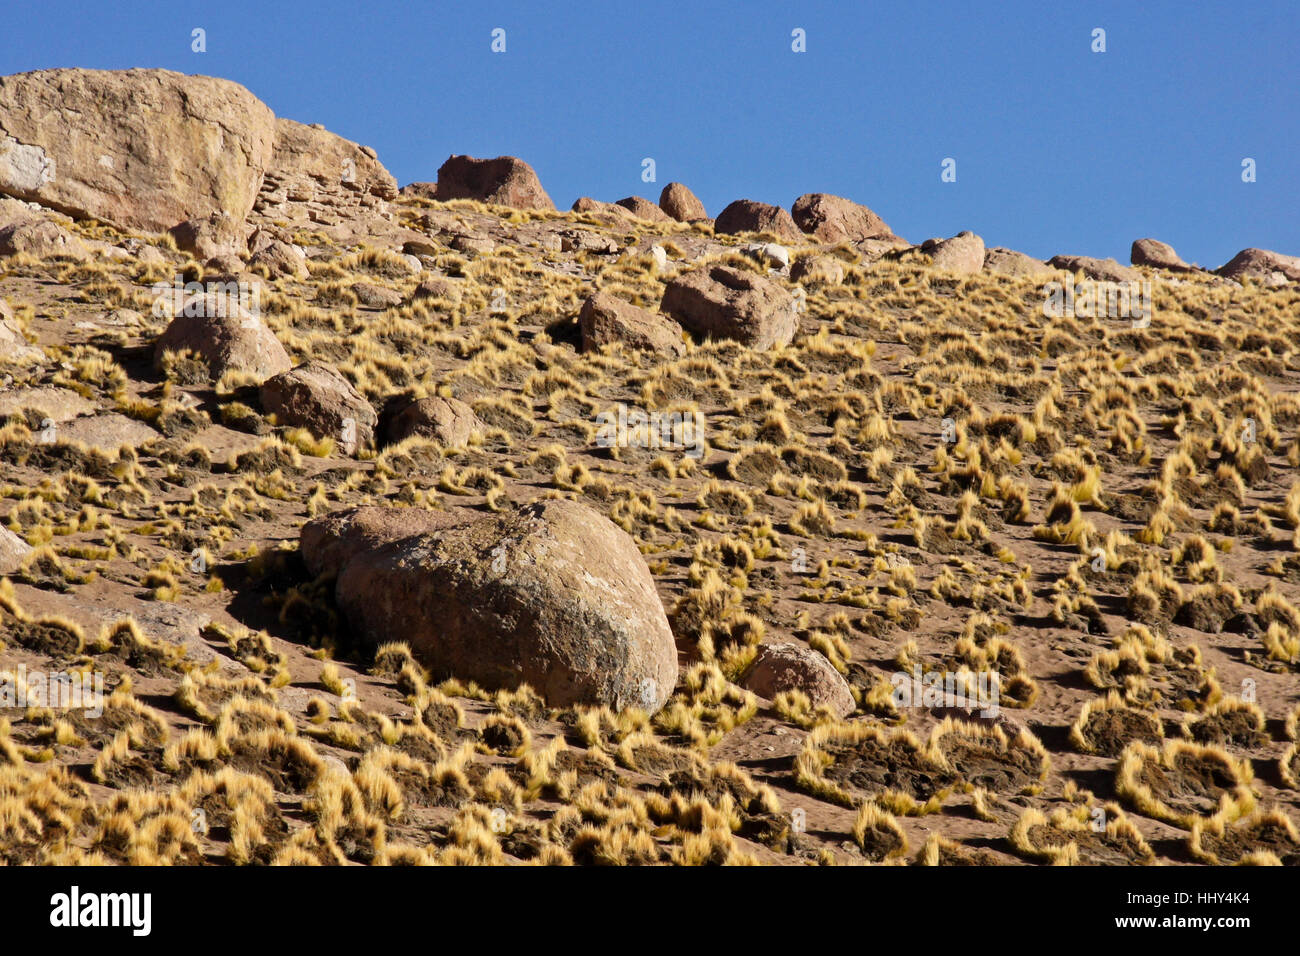 Ichu grass (Stipa spp.) growing on rocky hillside, Atacama Desert, Norte Grande, Chile Stock Photo